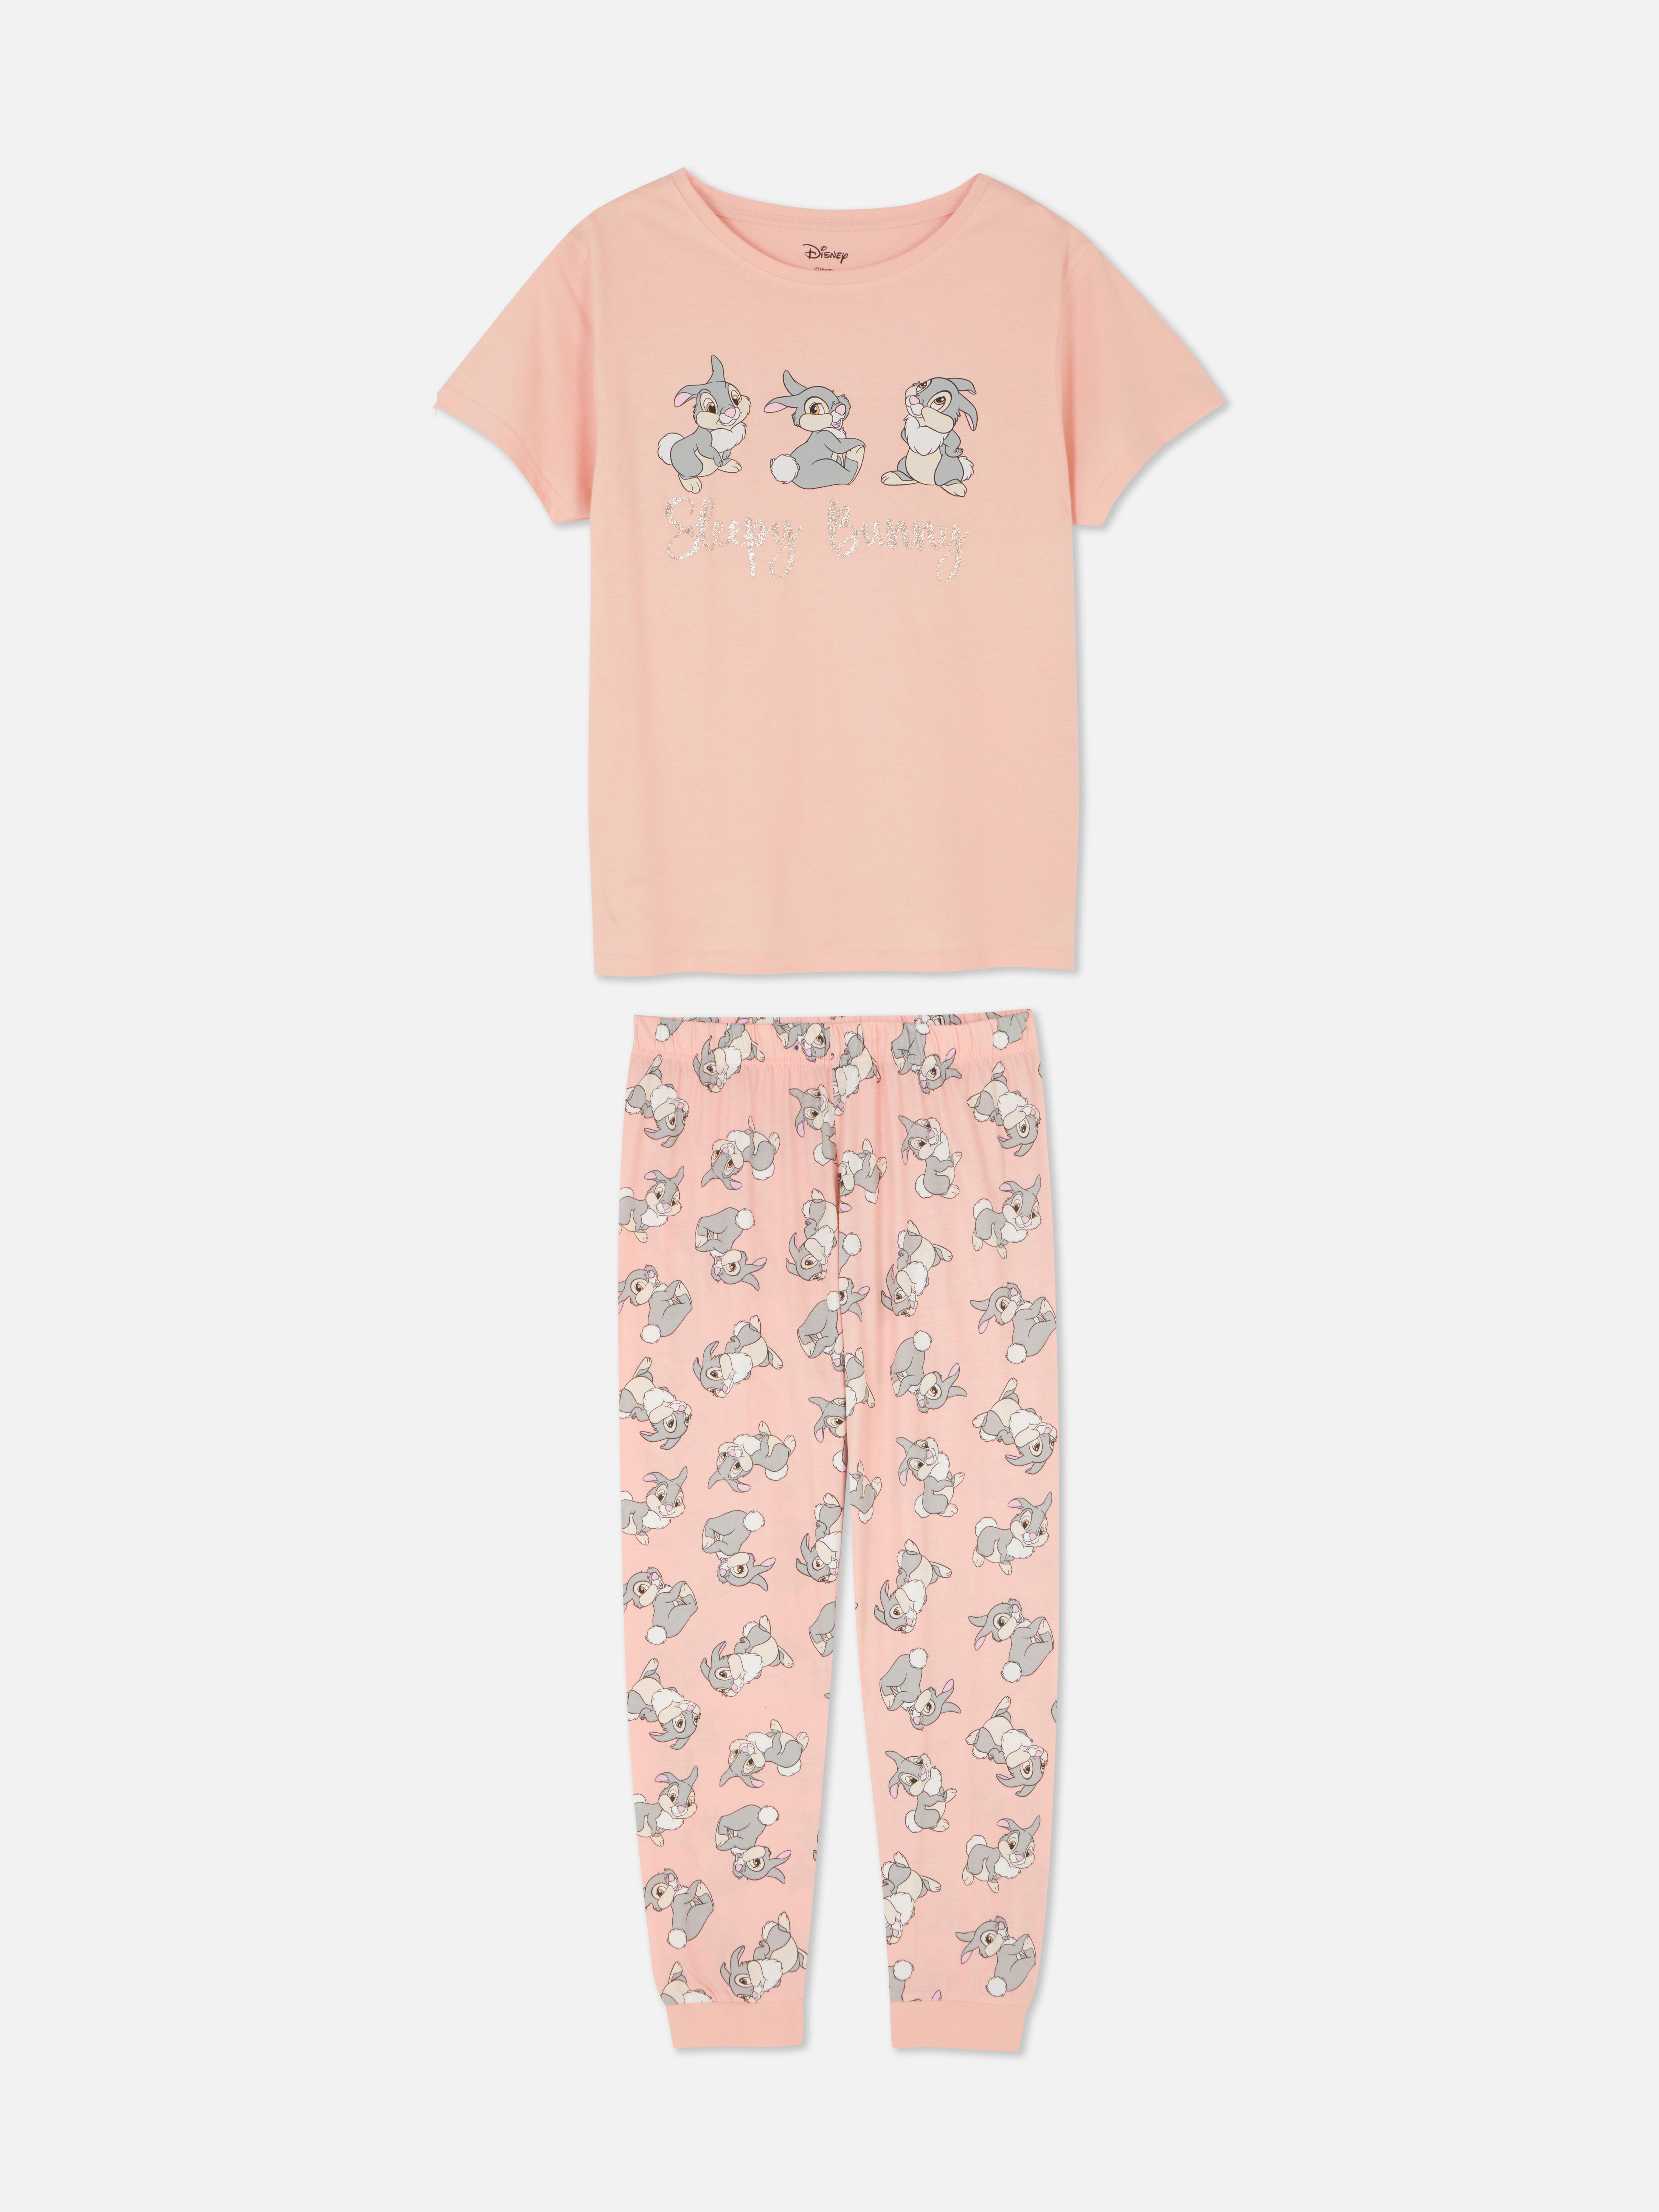 Disney Graphic T-Shirt and Bottoms Pyjamas